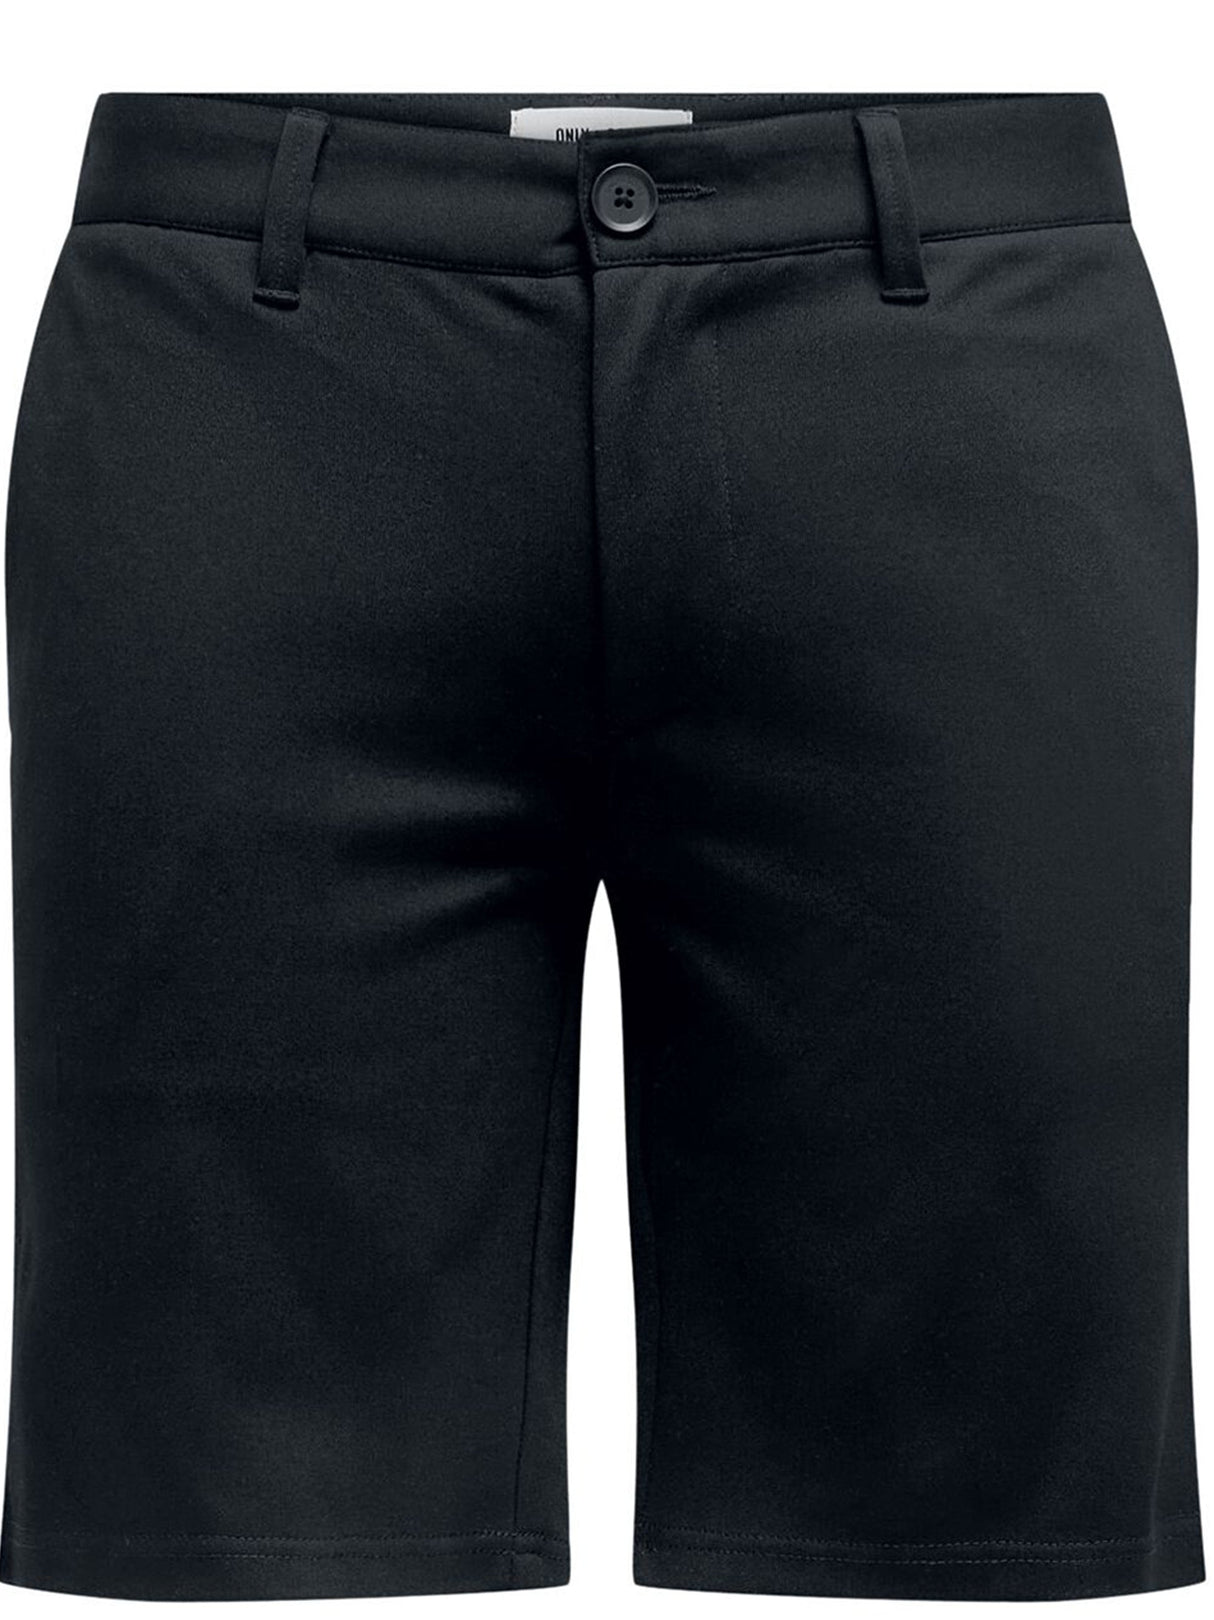 Image for Men's Plain Solid Short,Black